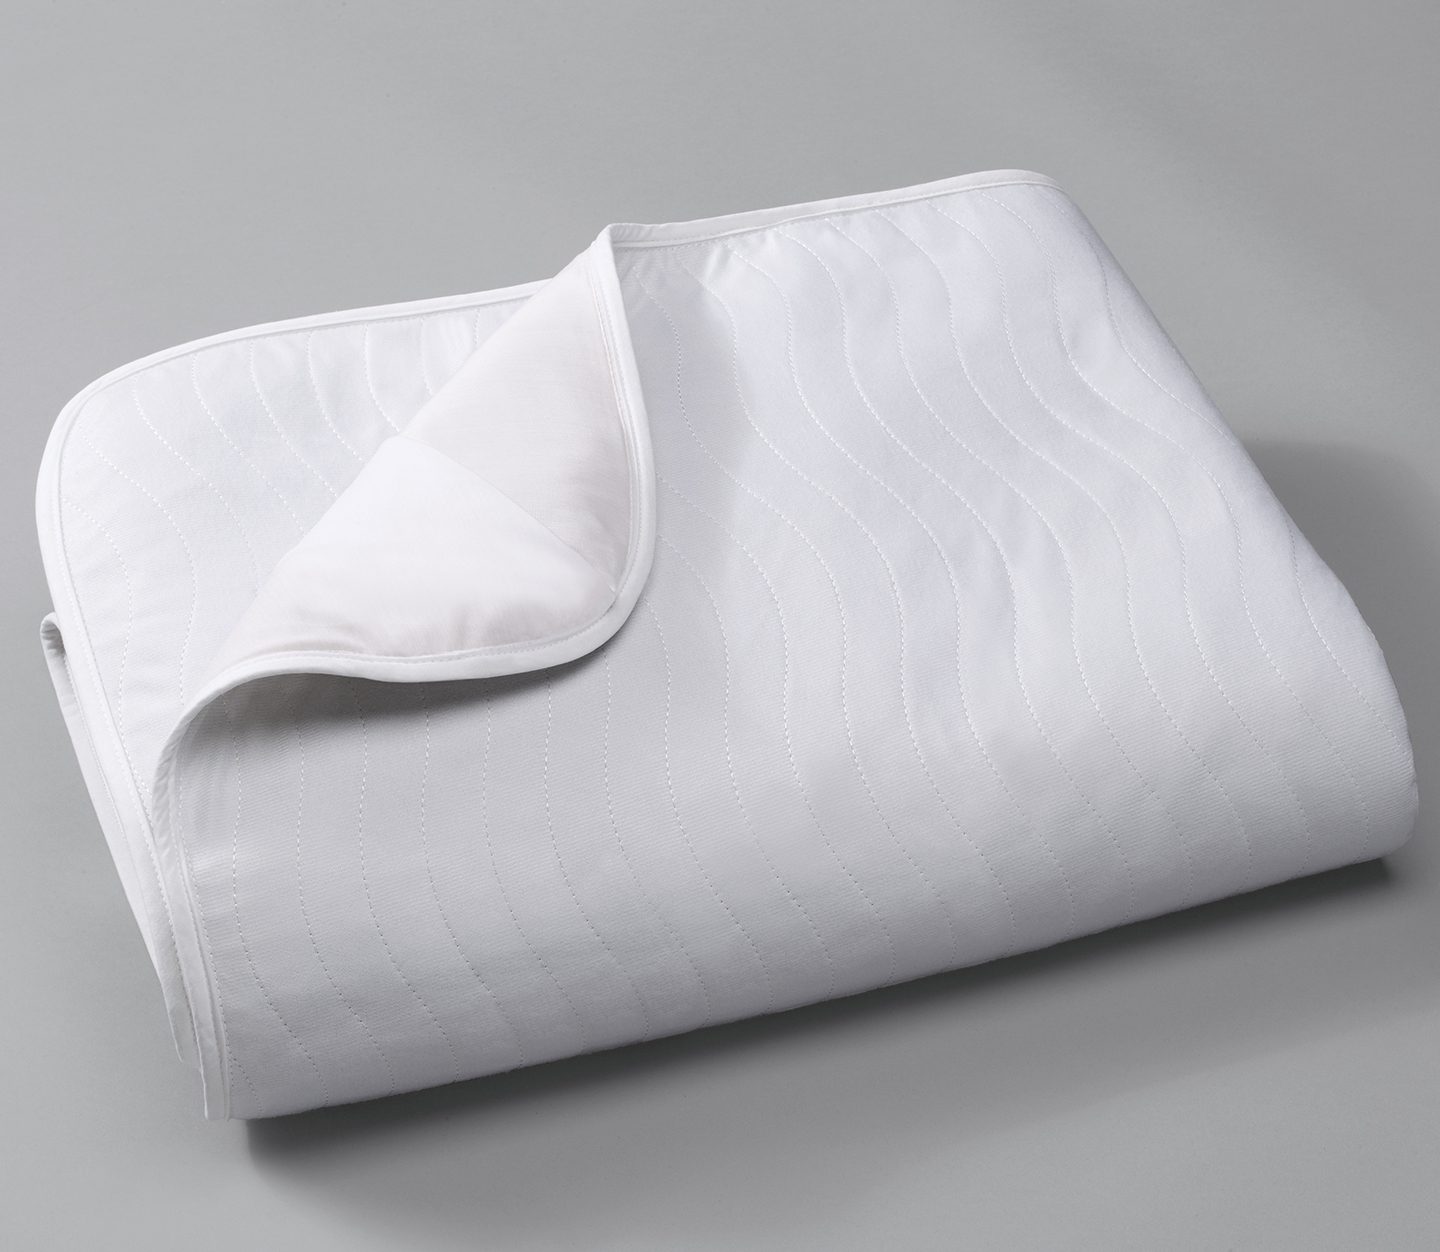 Standard Textile - ComfortCloud Mattress Pad, White, Twin